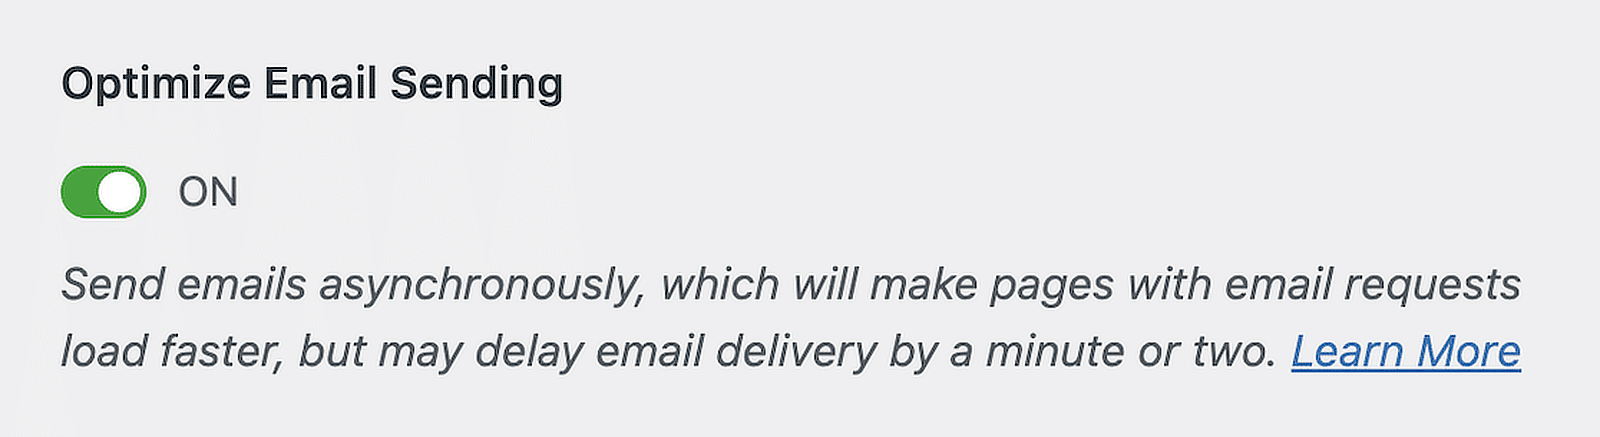 optimize email sending